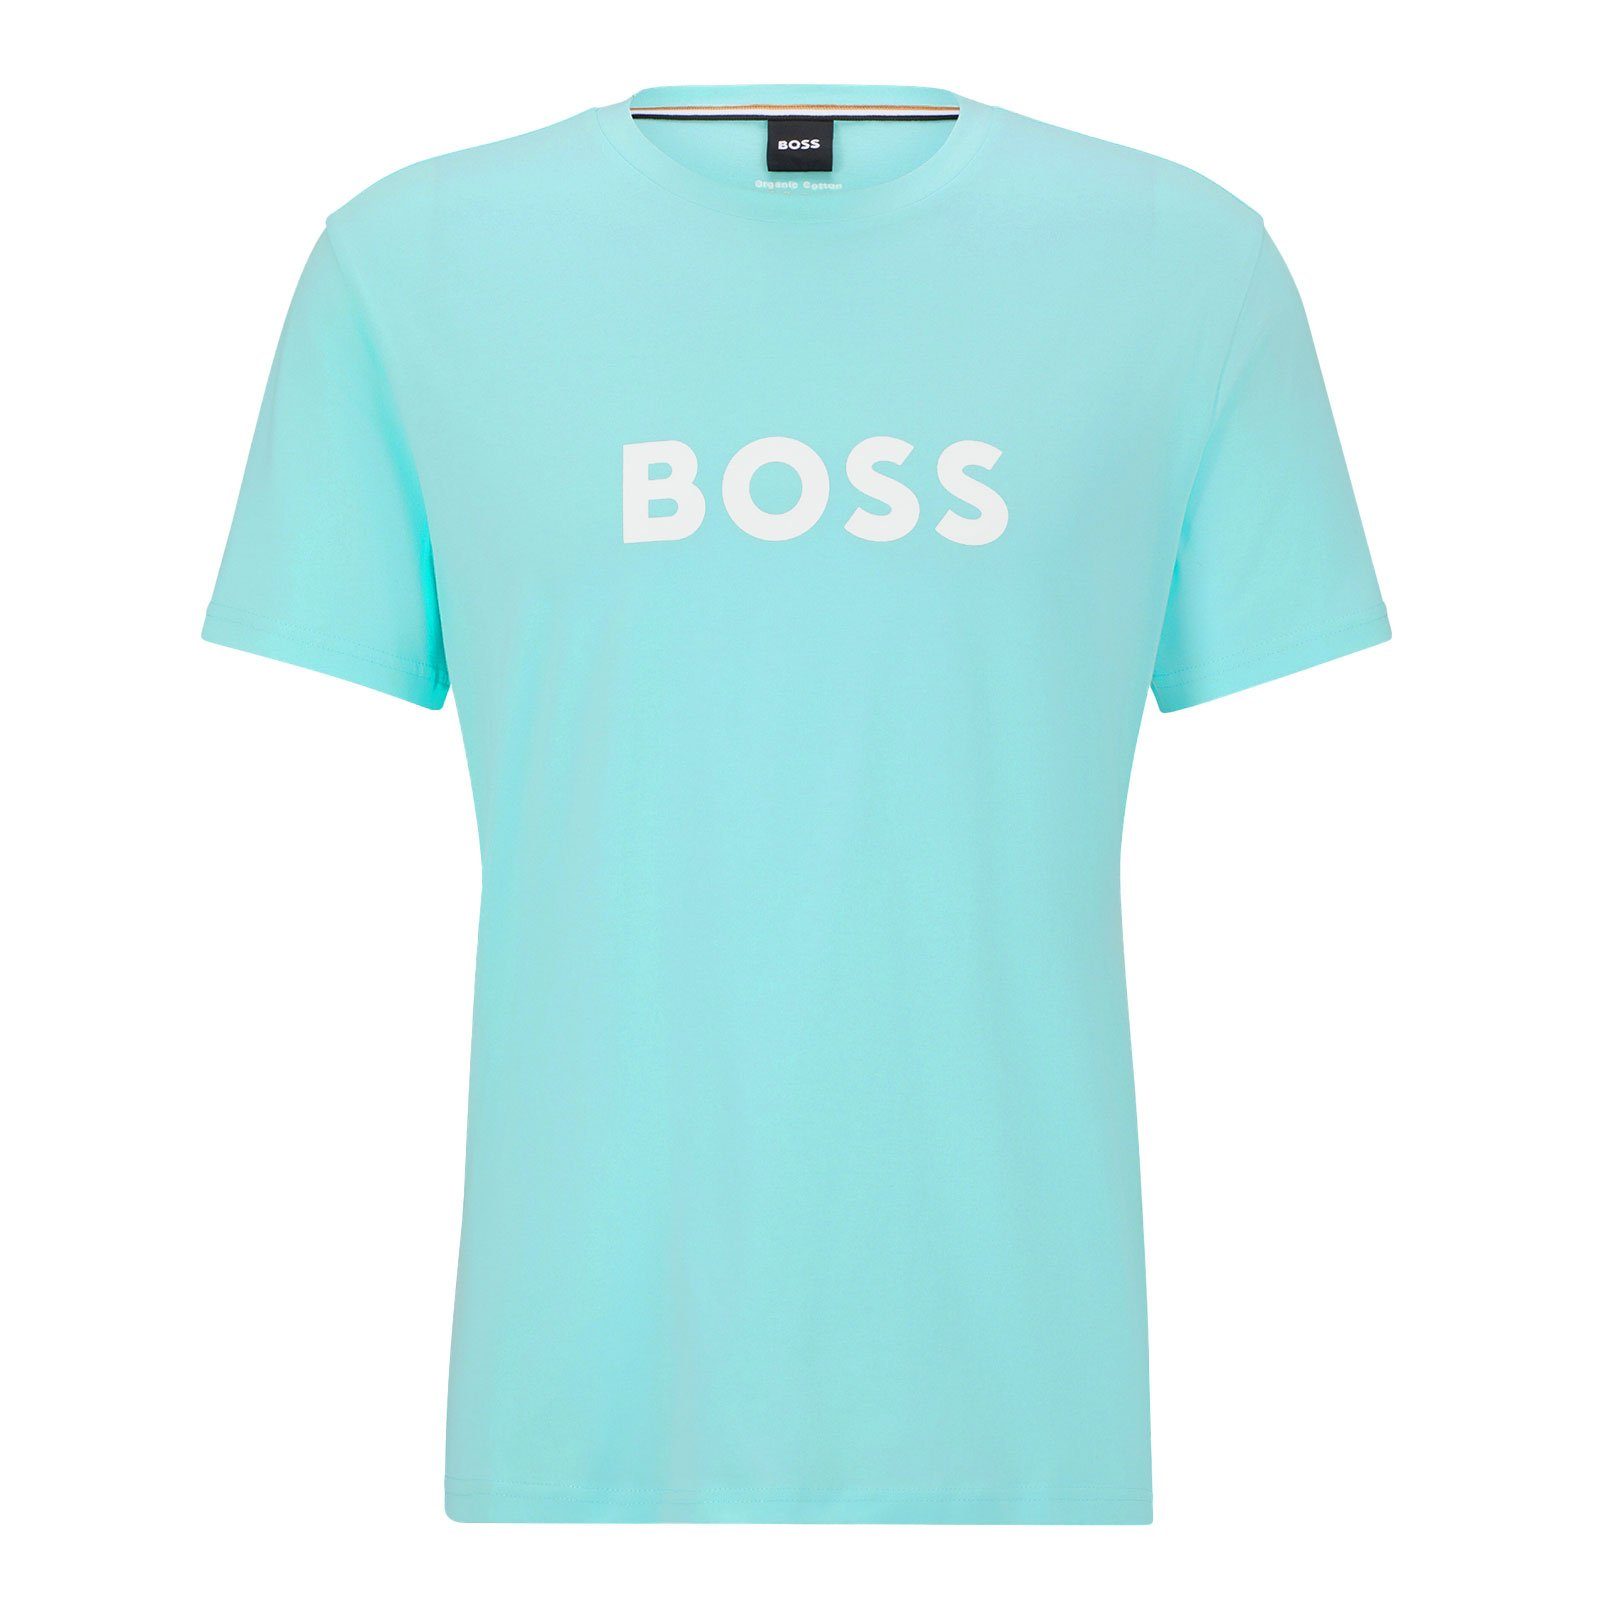 Markenprint auf BOSS T-Shirt open der Brust T-Shirt großem mit green 356 RN